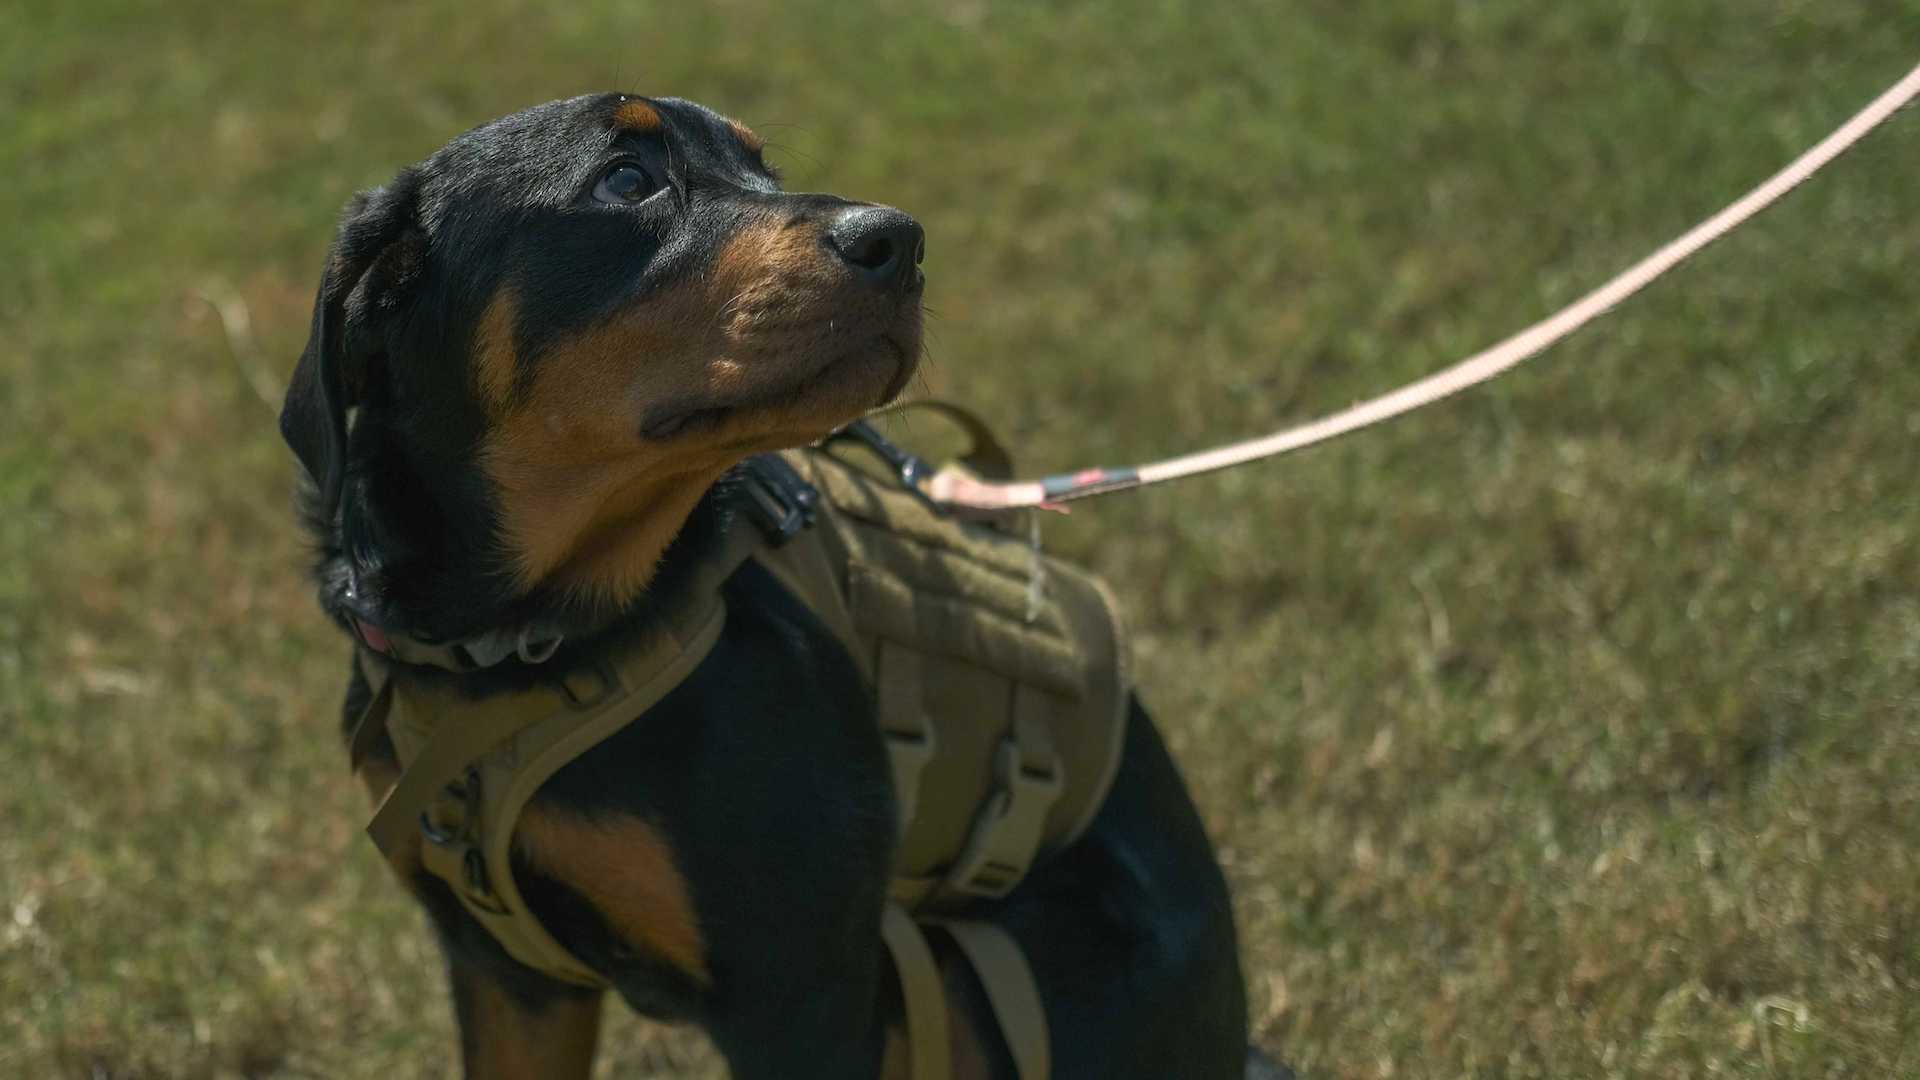 Service Dog Badge do not pet Patch Pet Training Dog Strap Hook